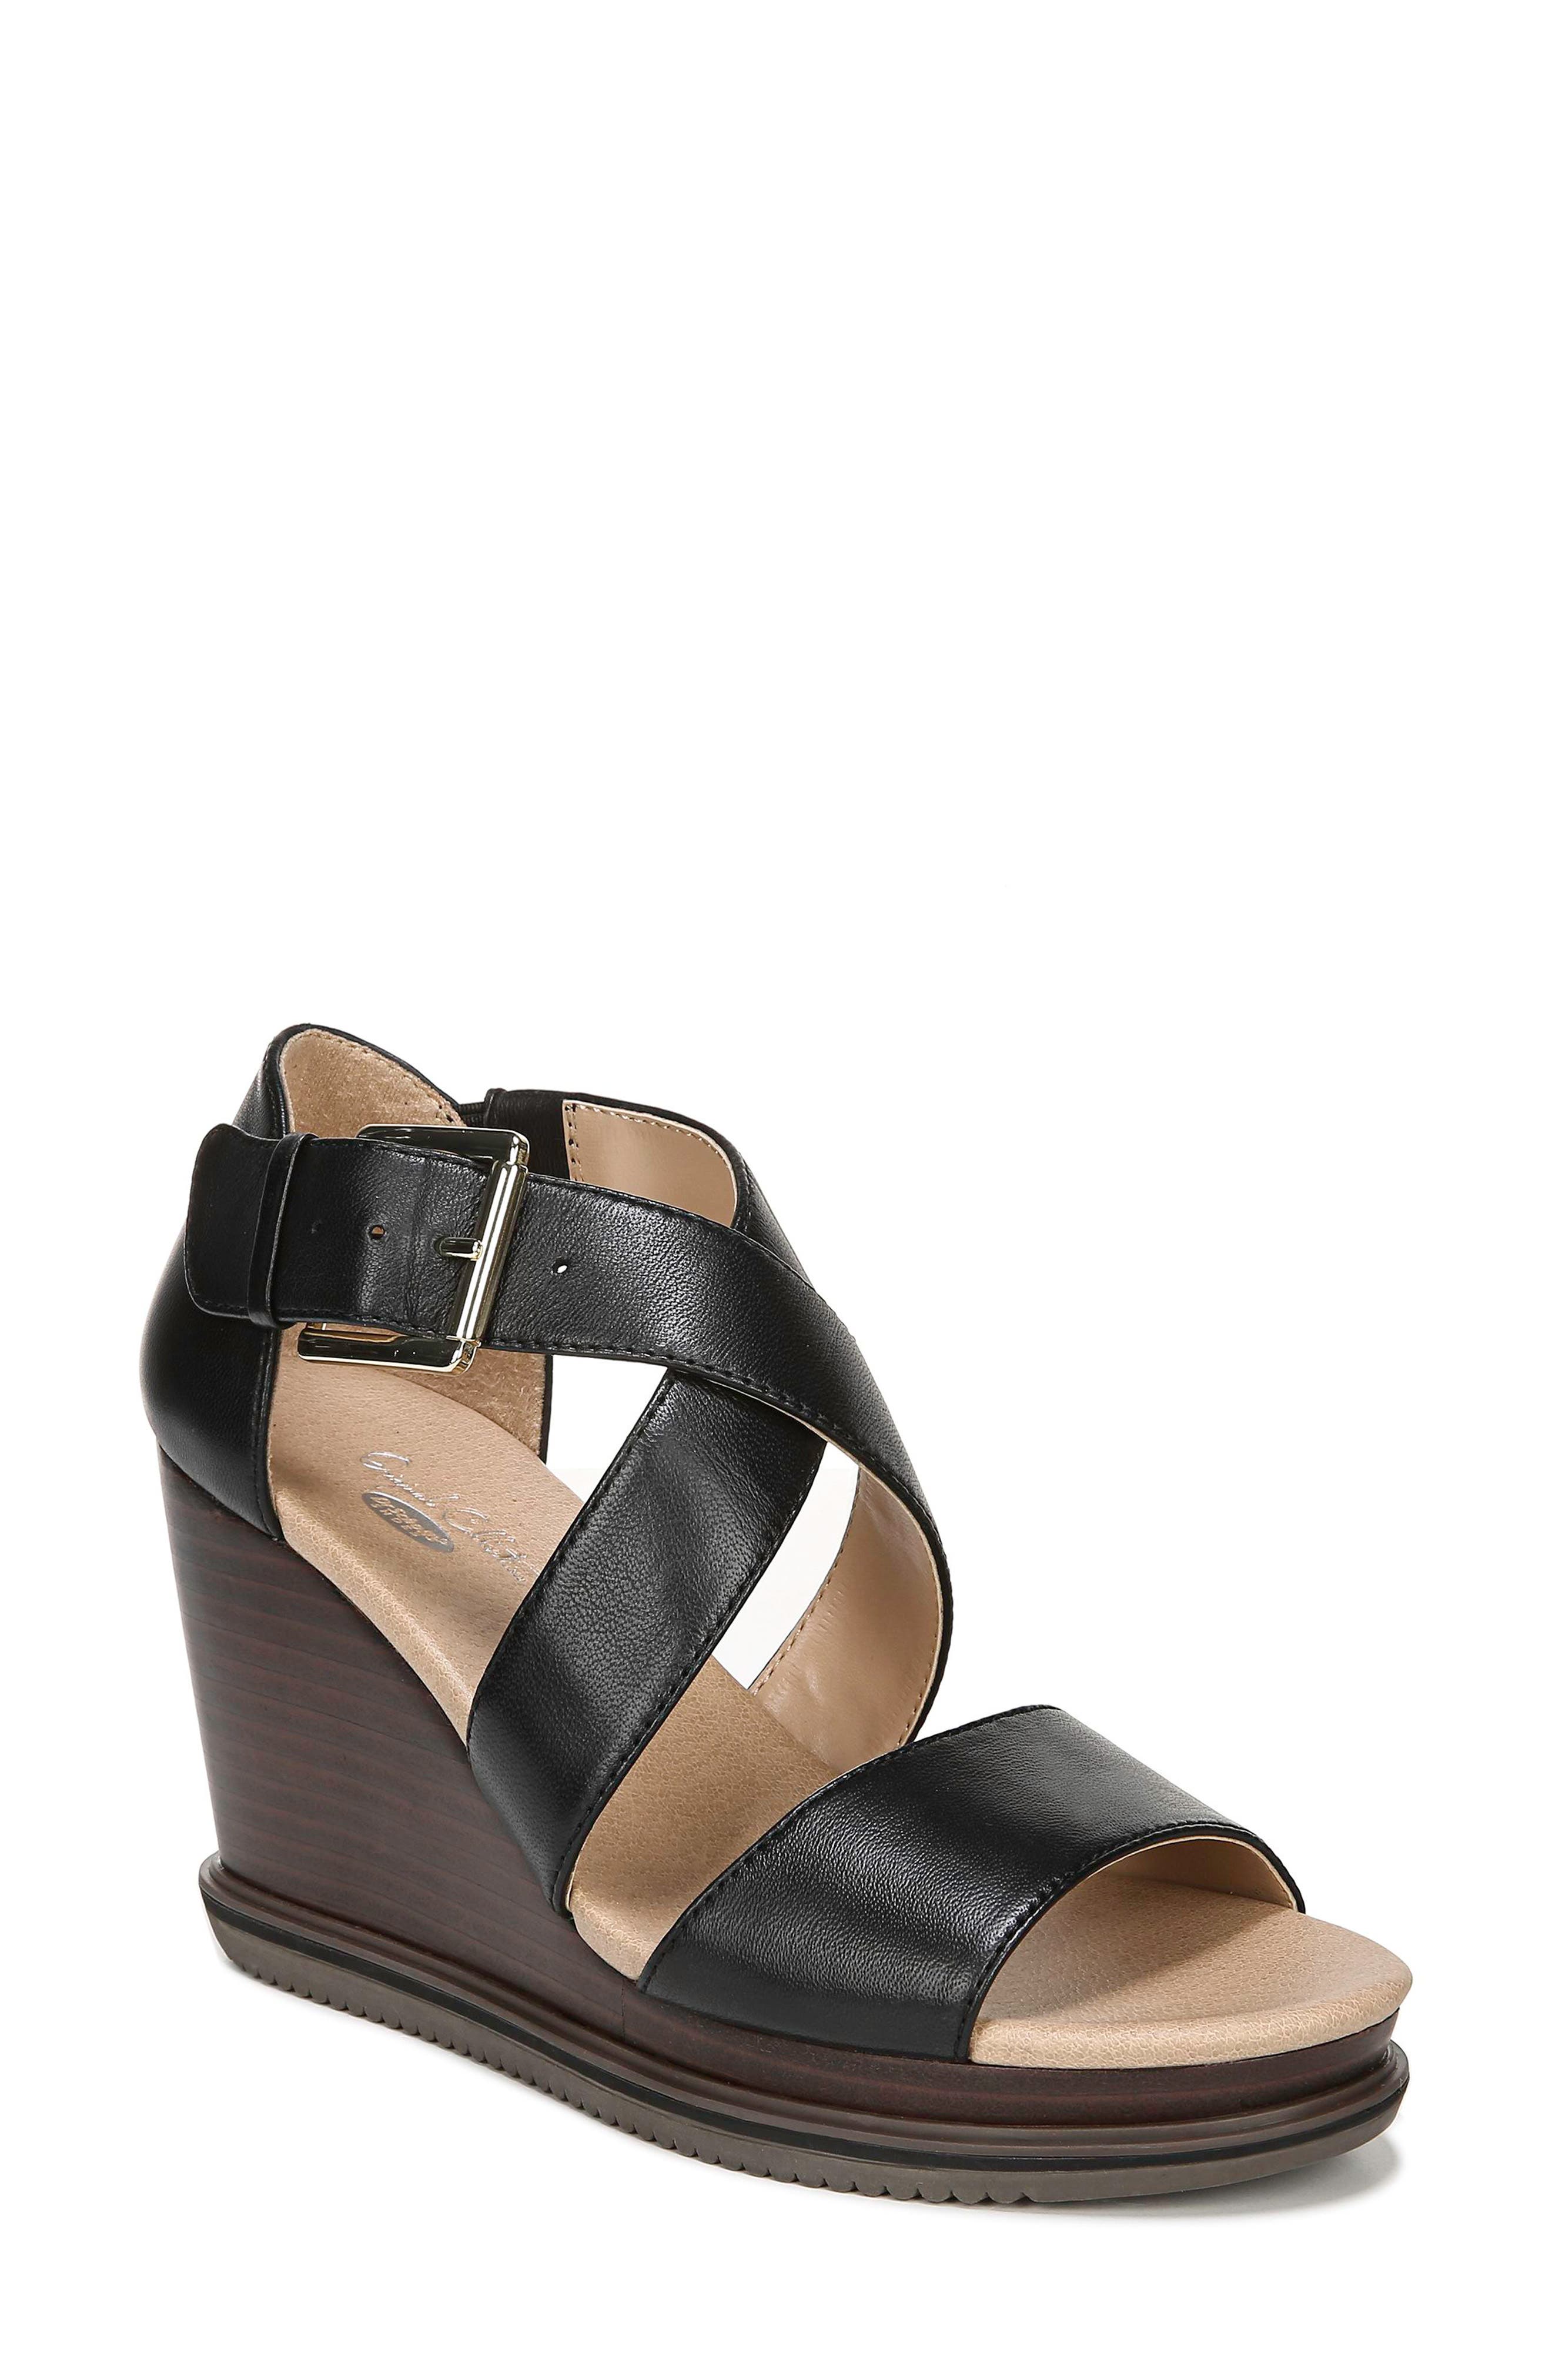 UPC 742976000072 product image for Women's Dr. Scholl's Sweet Escape Wedge Sandal, Size 7.5 M - Black | upcitemdb.com